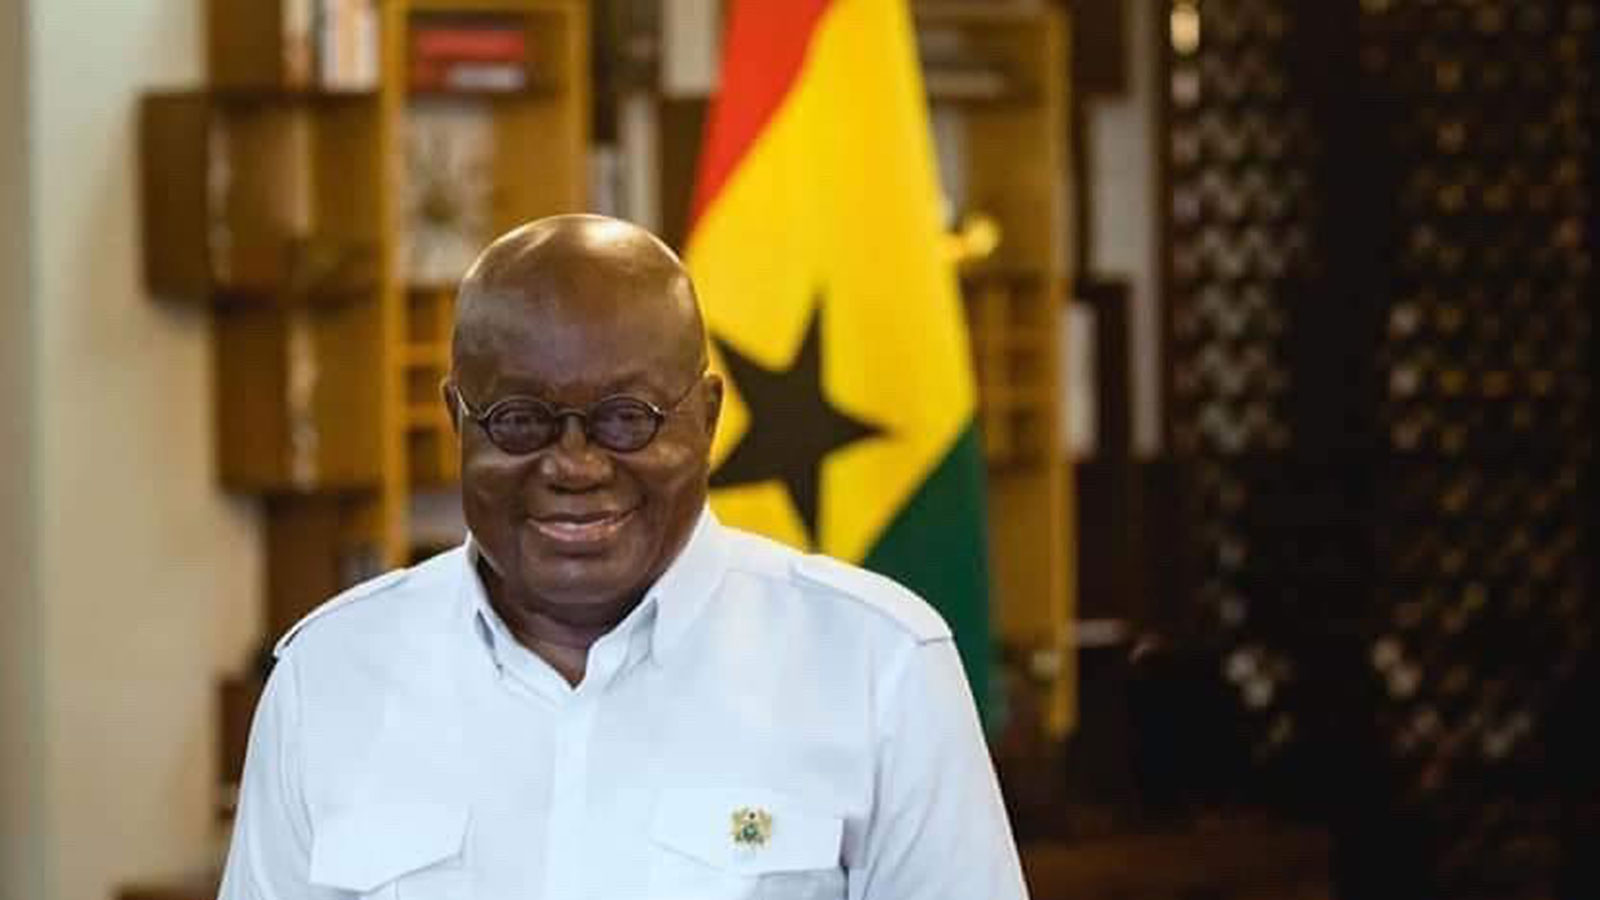 Ghana’s President Akufo-Addo